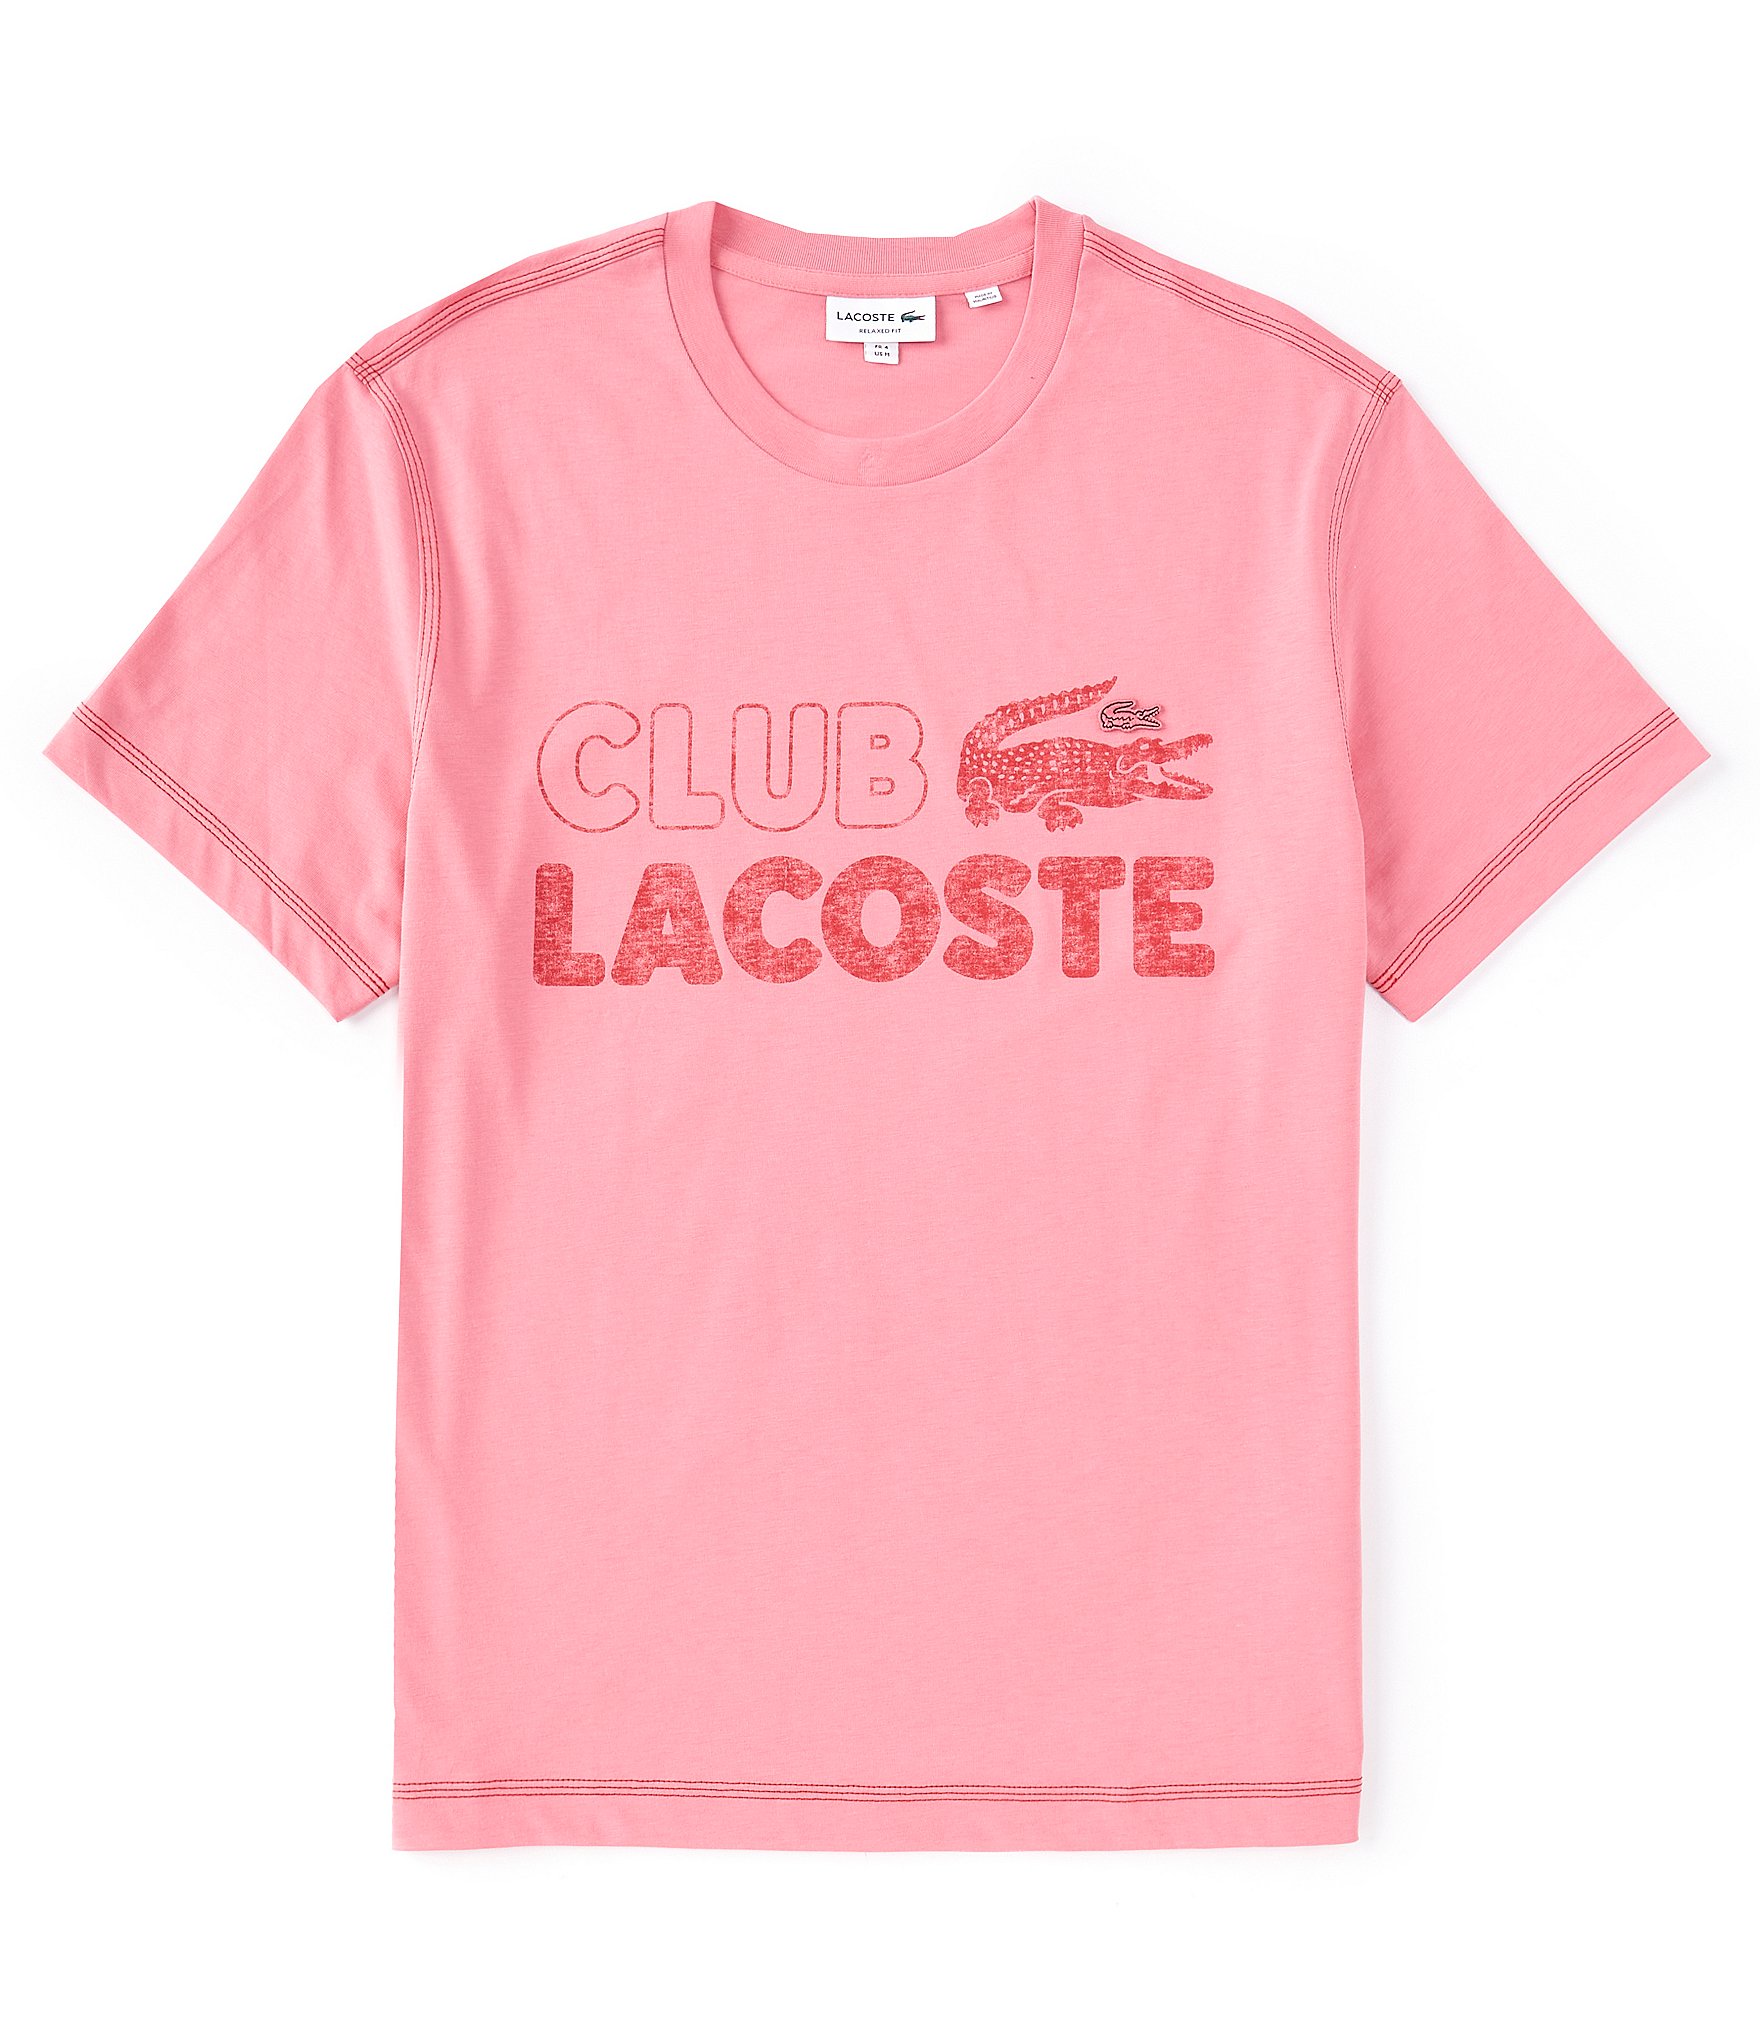 kalorie Fugtig meget fint Lacoste Club Lacoste Short Sleeve T-Shirt | Dillard's